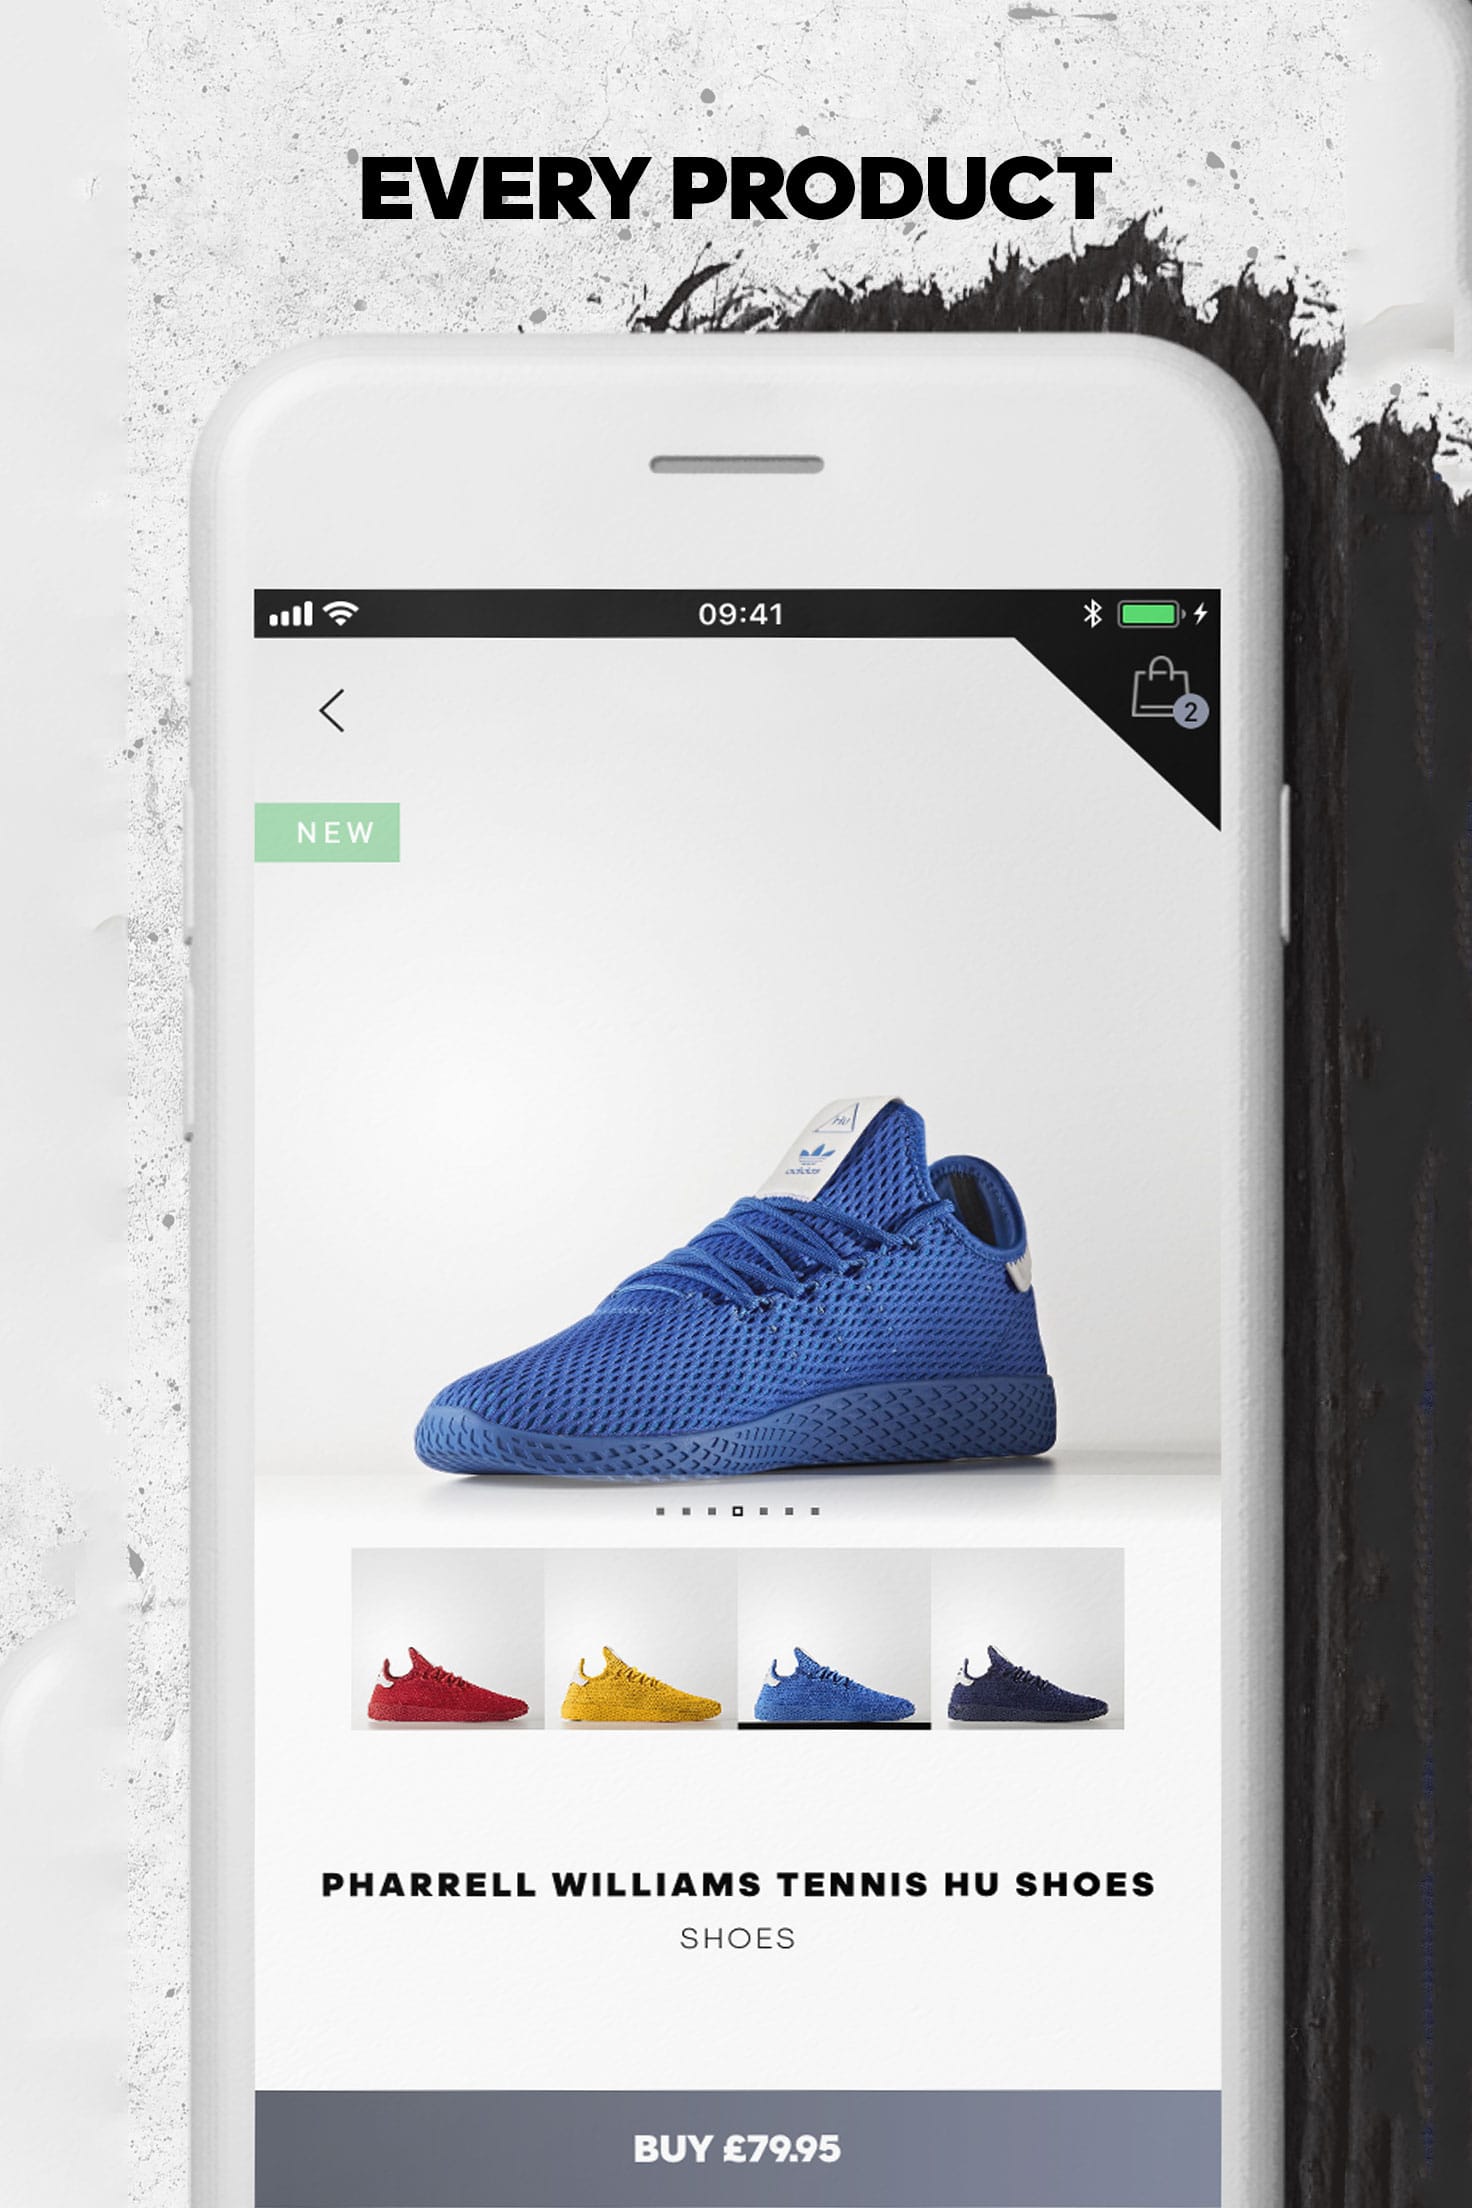 adidas shop app